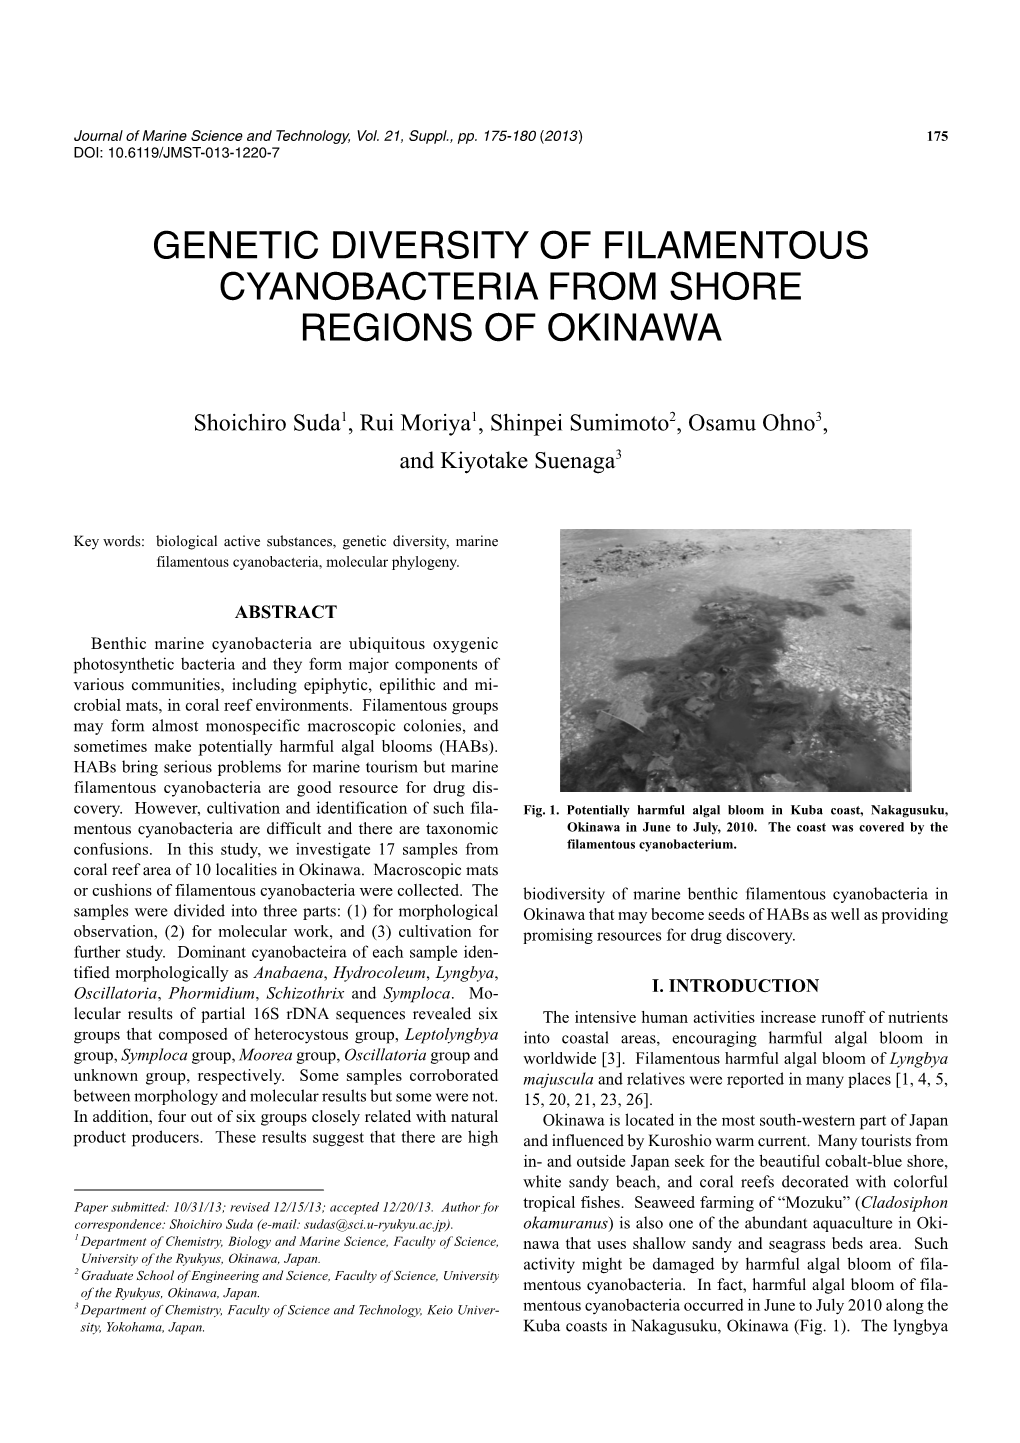 Genetic Diversity of Filamentous Cyanobacteria from Shore Regions of Okinawa